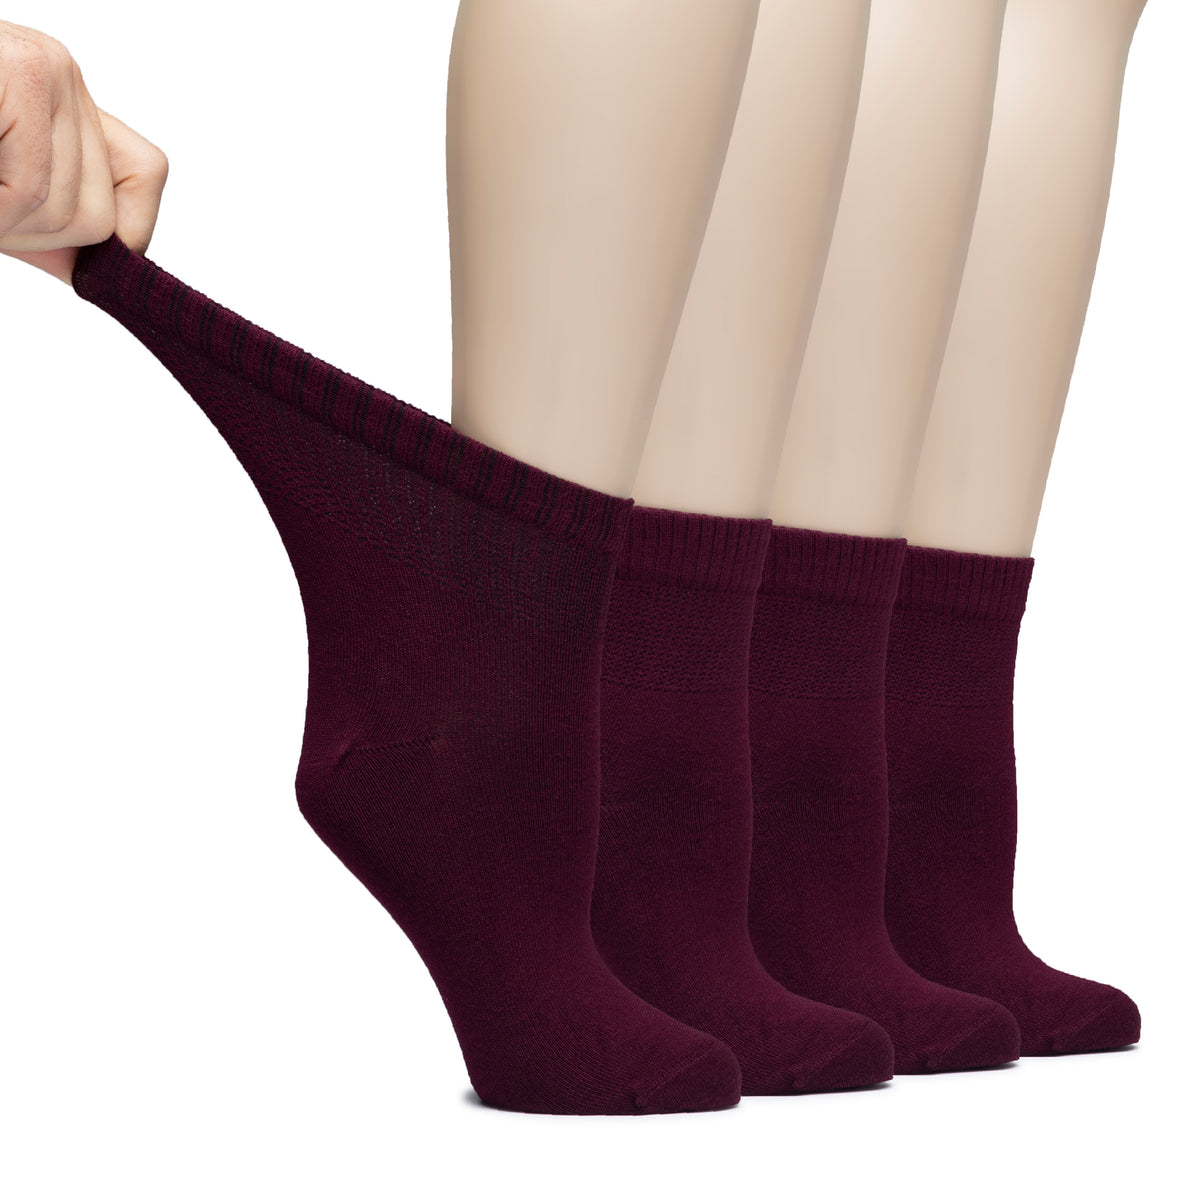 Hugh Ugoli Lightweight Women's Diabetic Ankle Socks Bamboo Thin Socks Seamless Toe and Non-Binding Top, 4 Pairs, , Shoe Size: 6-9/10-12 | Shoe Size: 6-9 | Charcoal